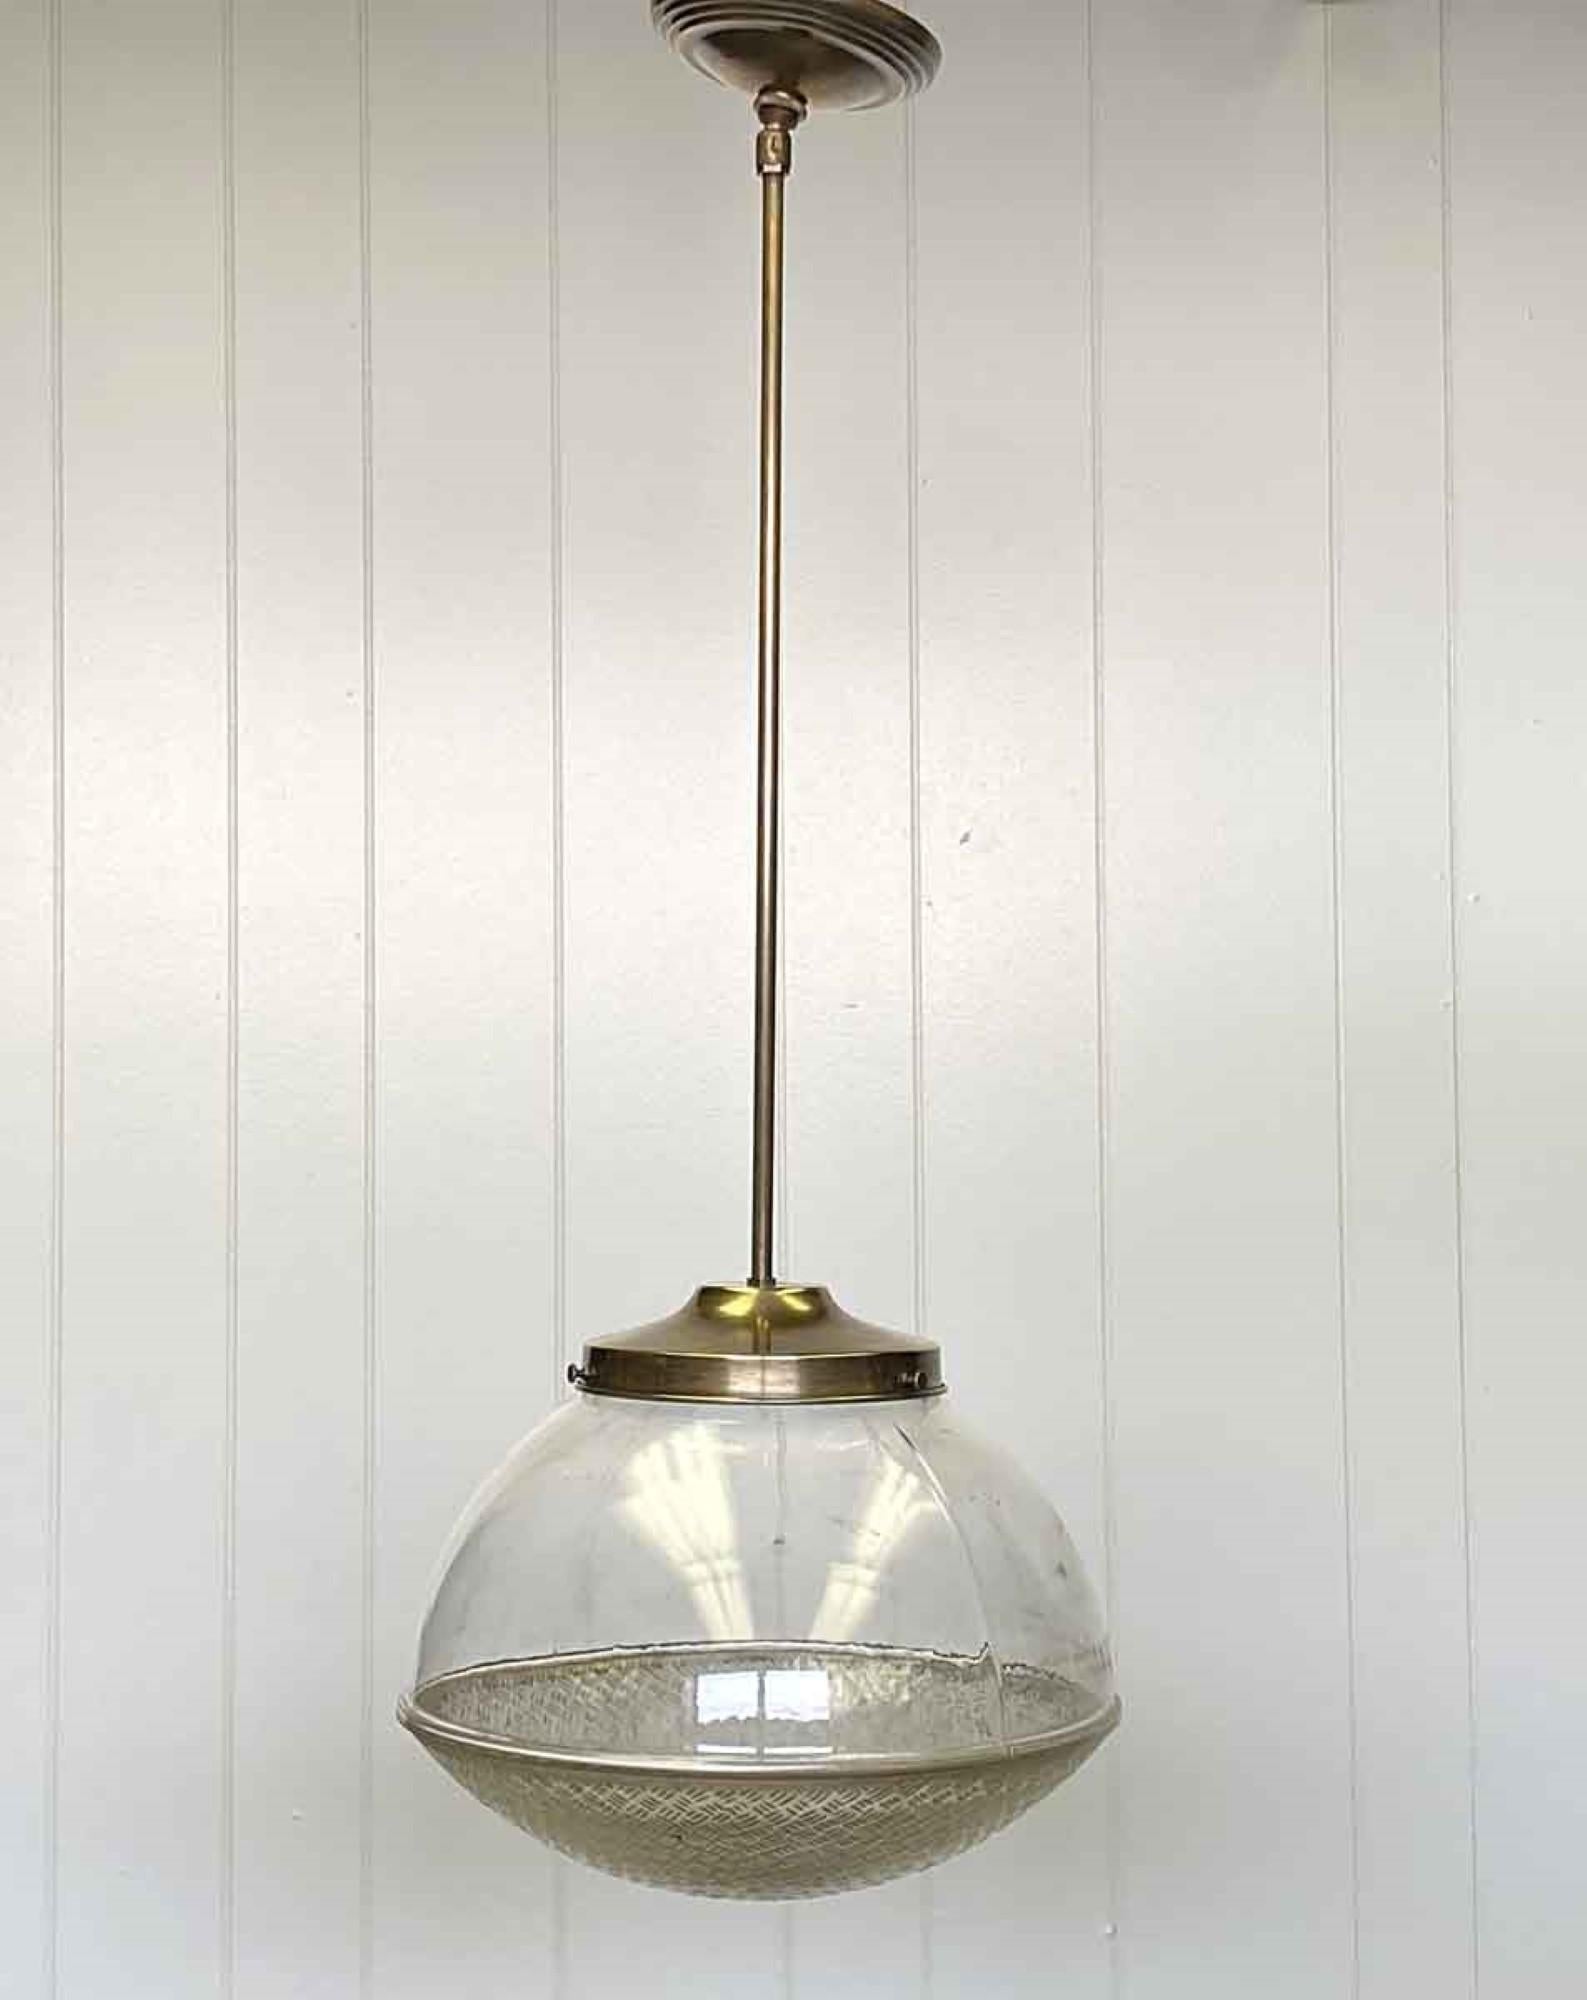 1920s pendant light